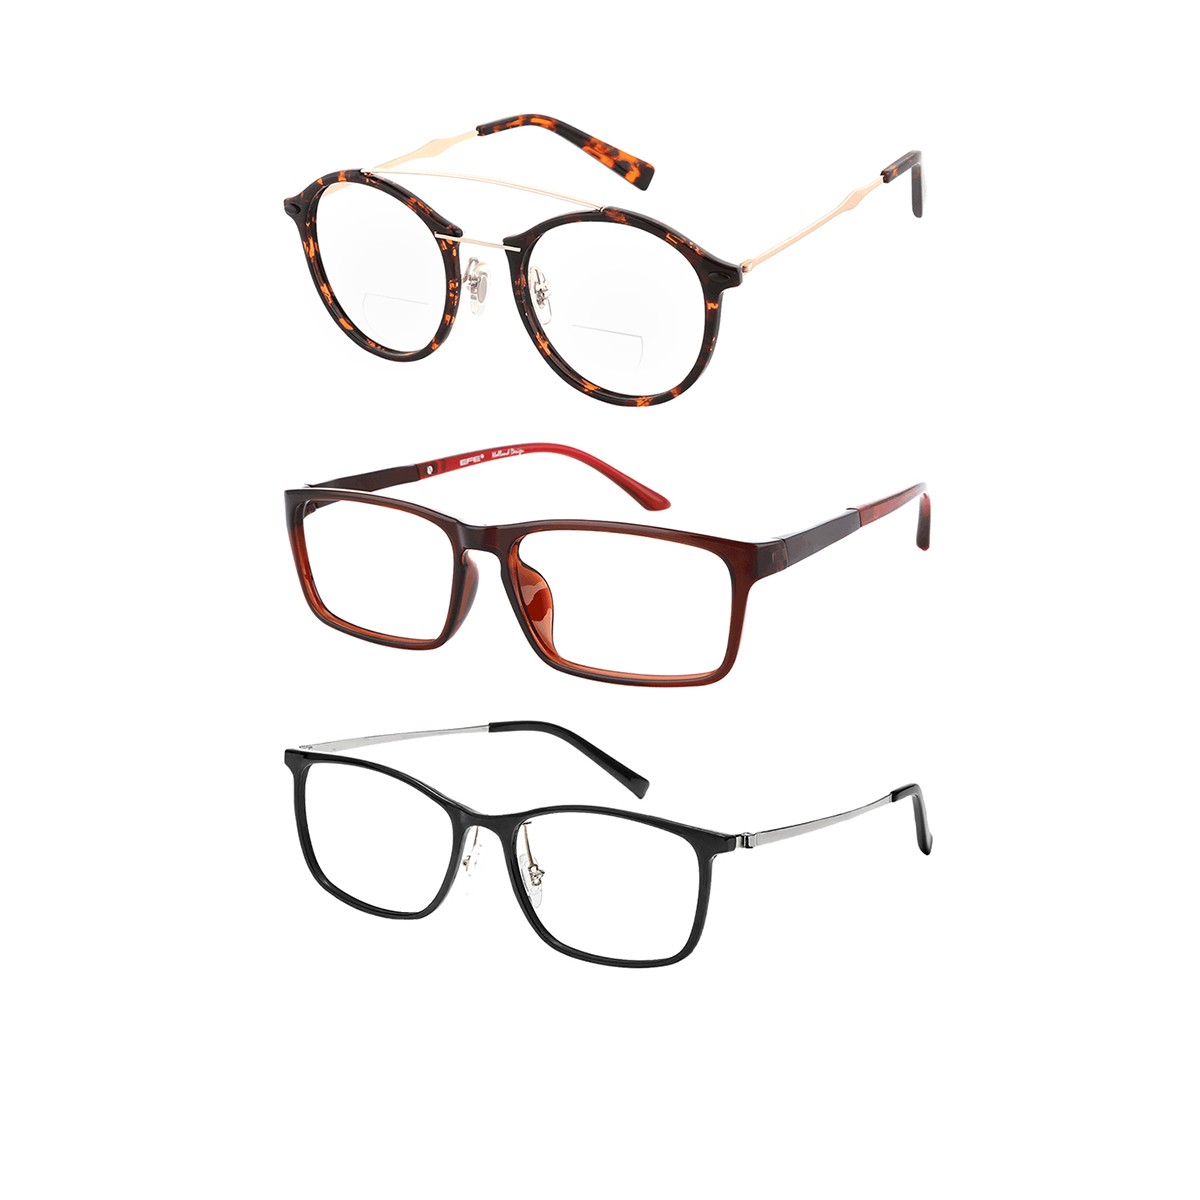 3-Pack Bifocals Reading Glasses Set